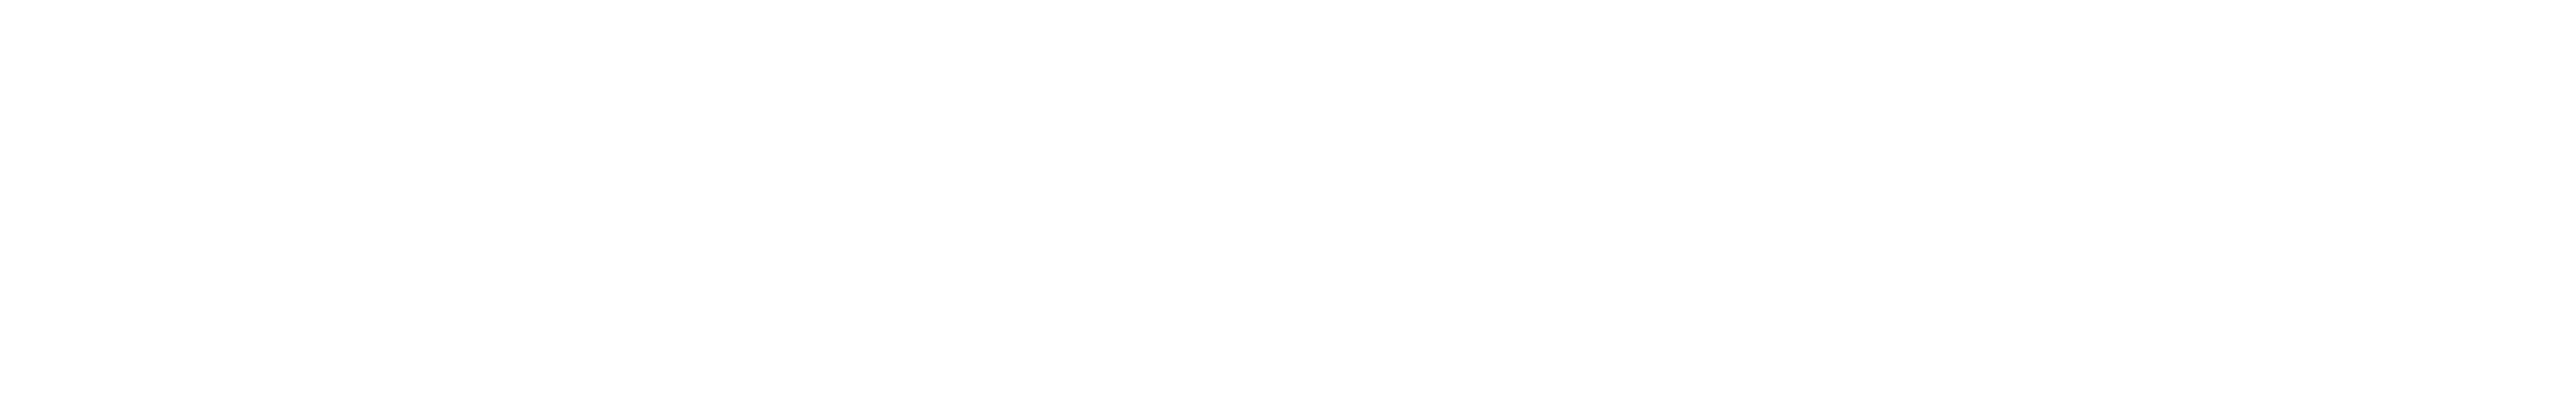 digilent-logo2015-mono-white-3000.png